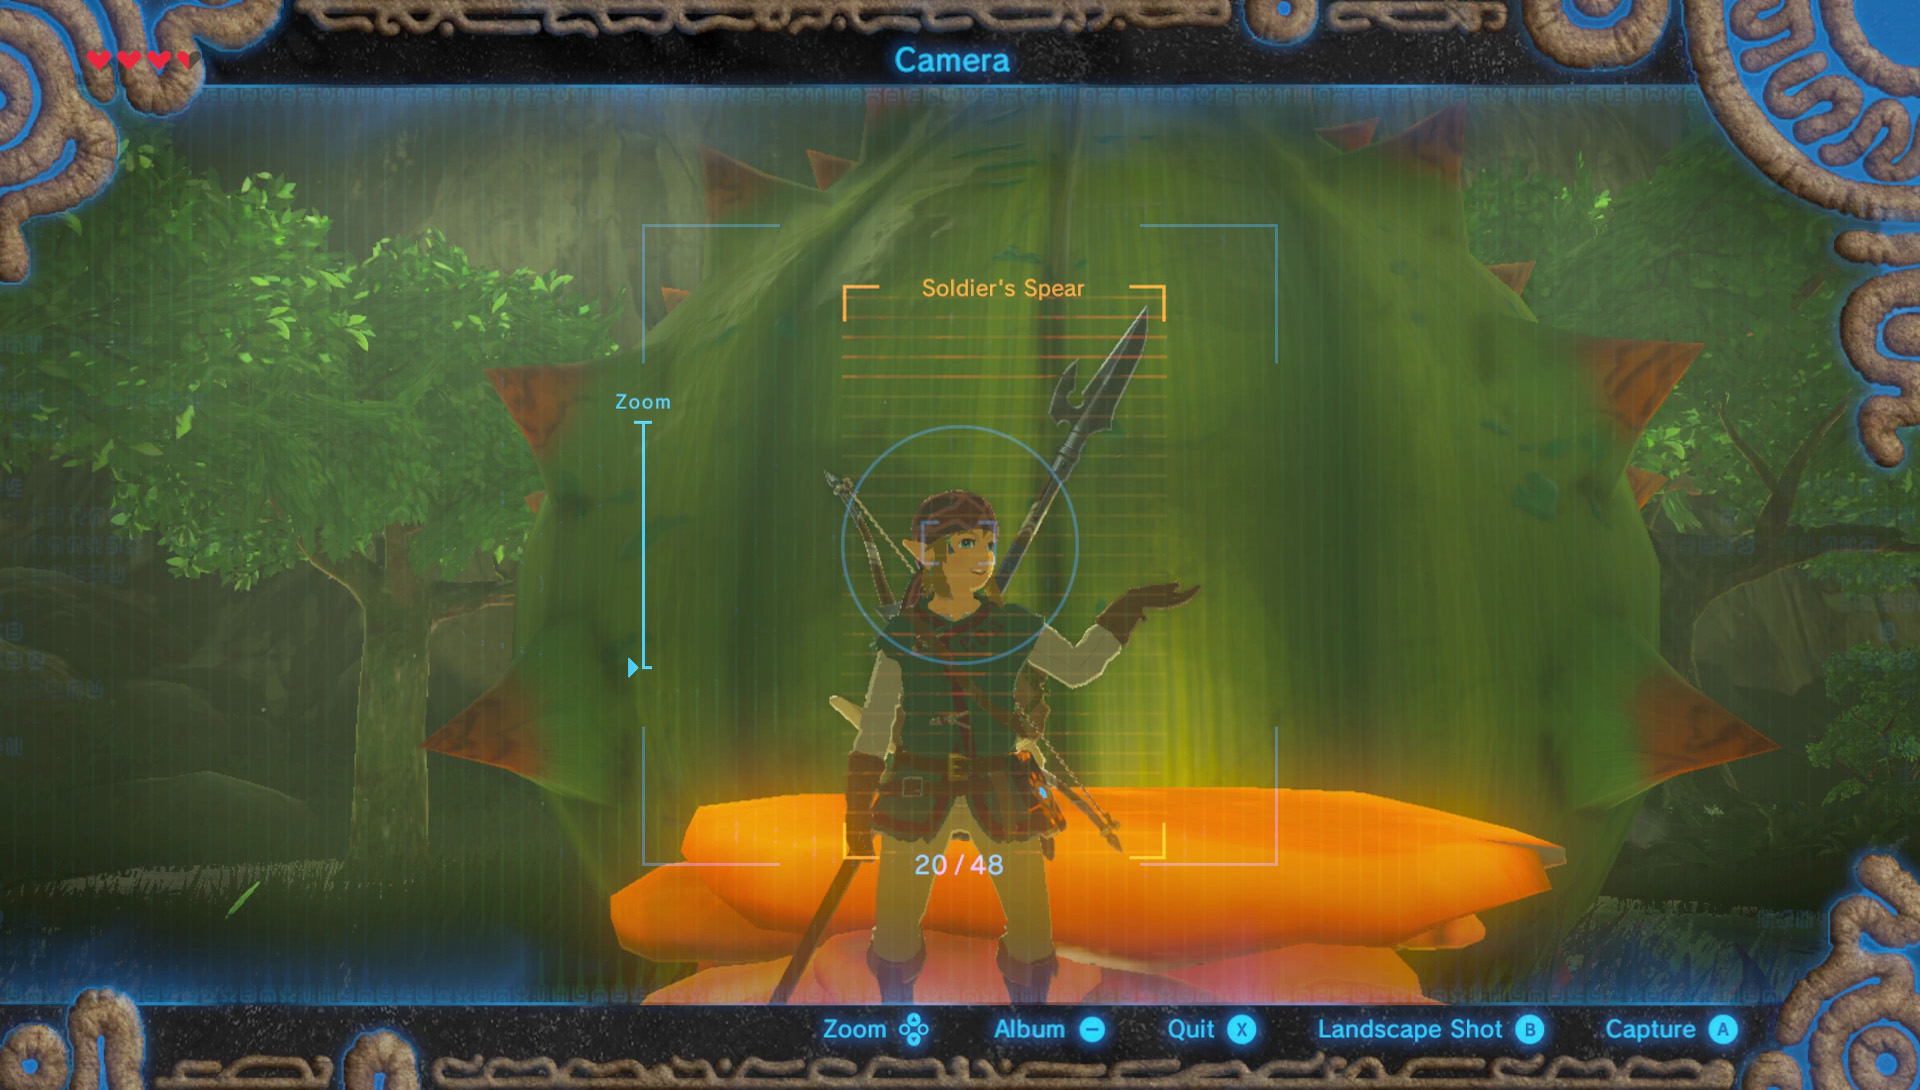 The Legend of Zelda Breath of the Wild camera rune photo mode